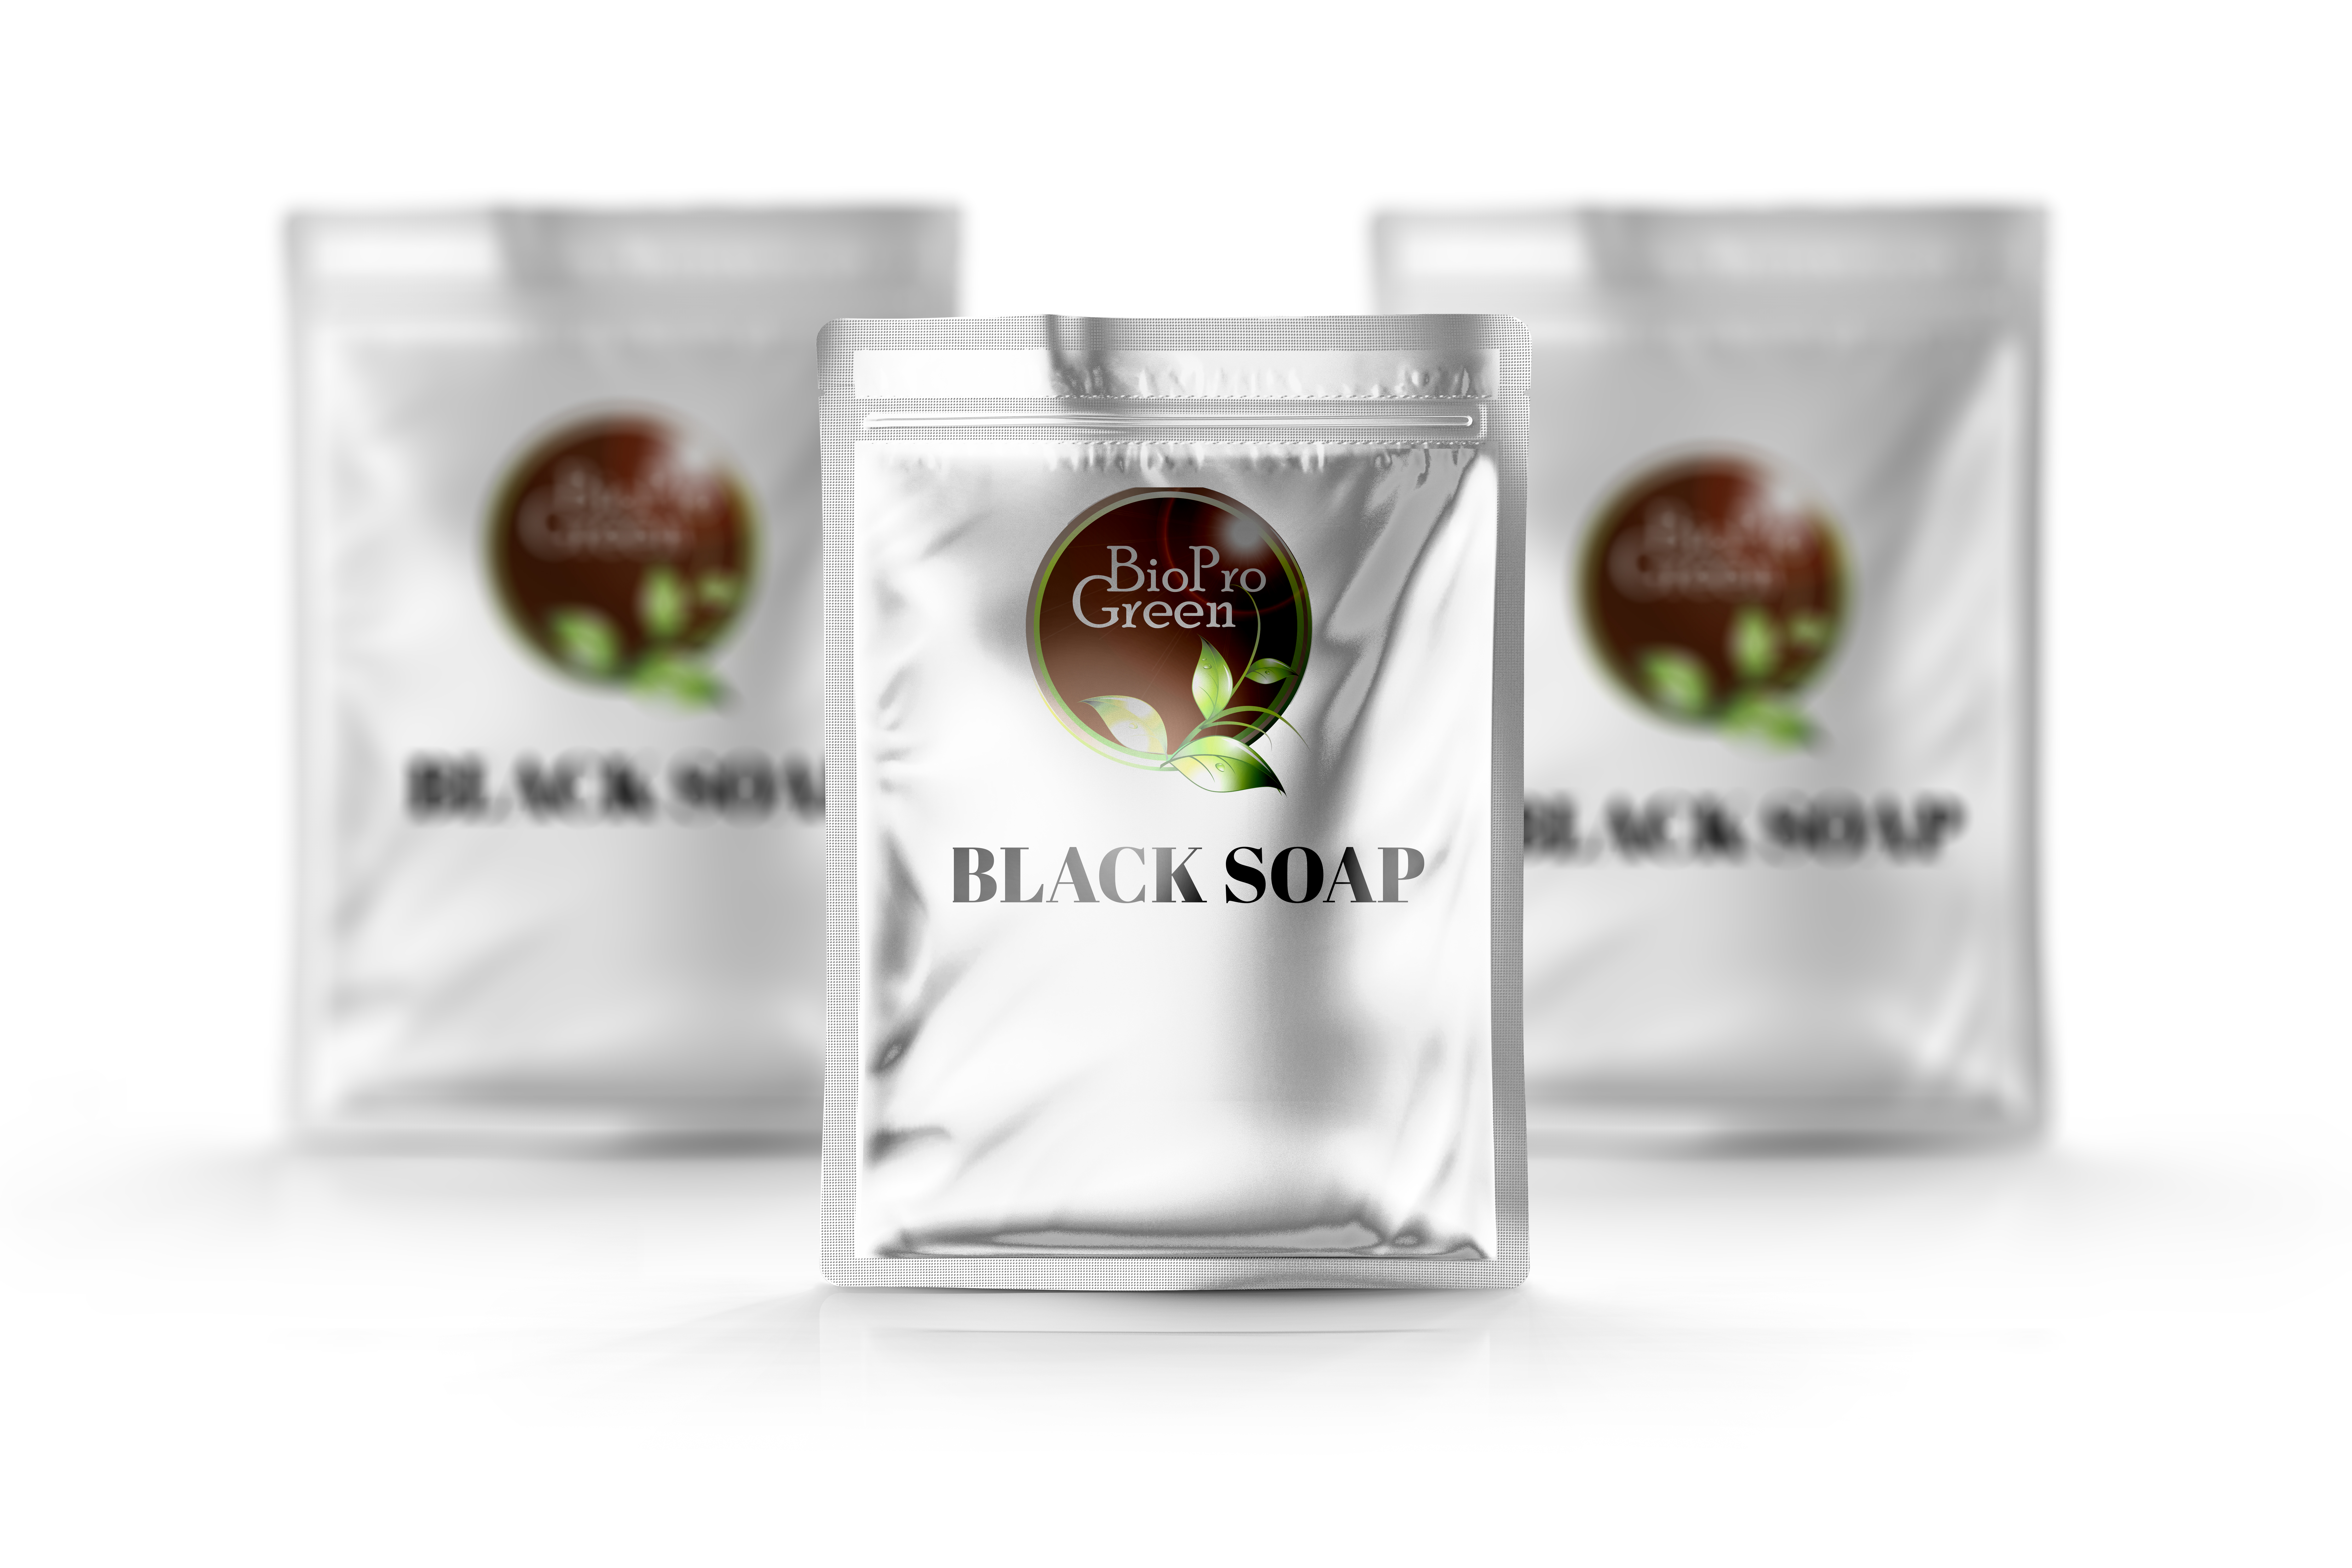 Black soap